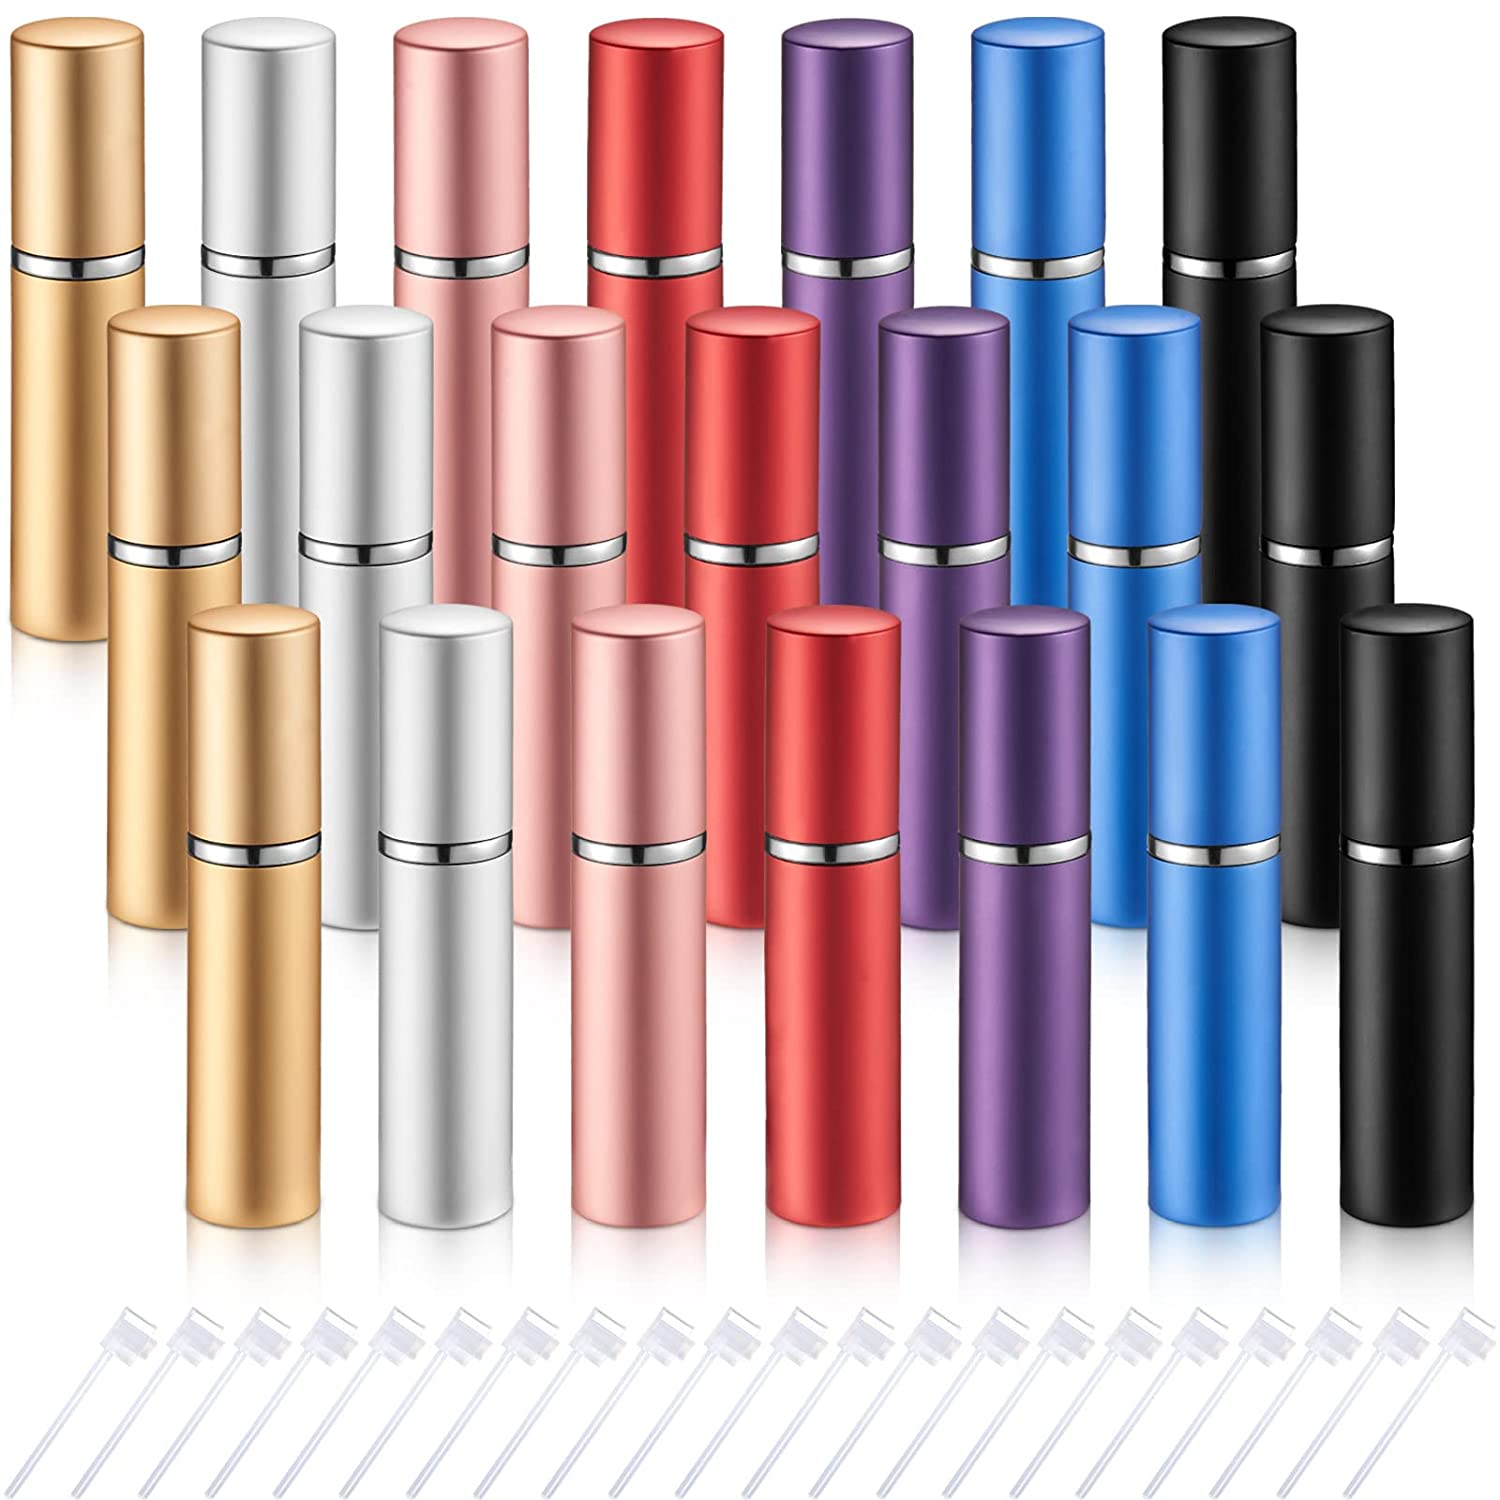 Enslz 100ml 3.4 oz Refillable Spray Perfume Bottles large cosmetic